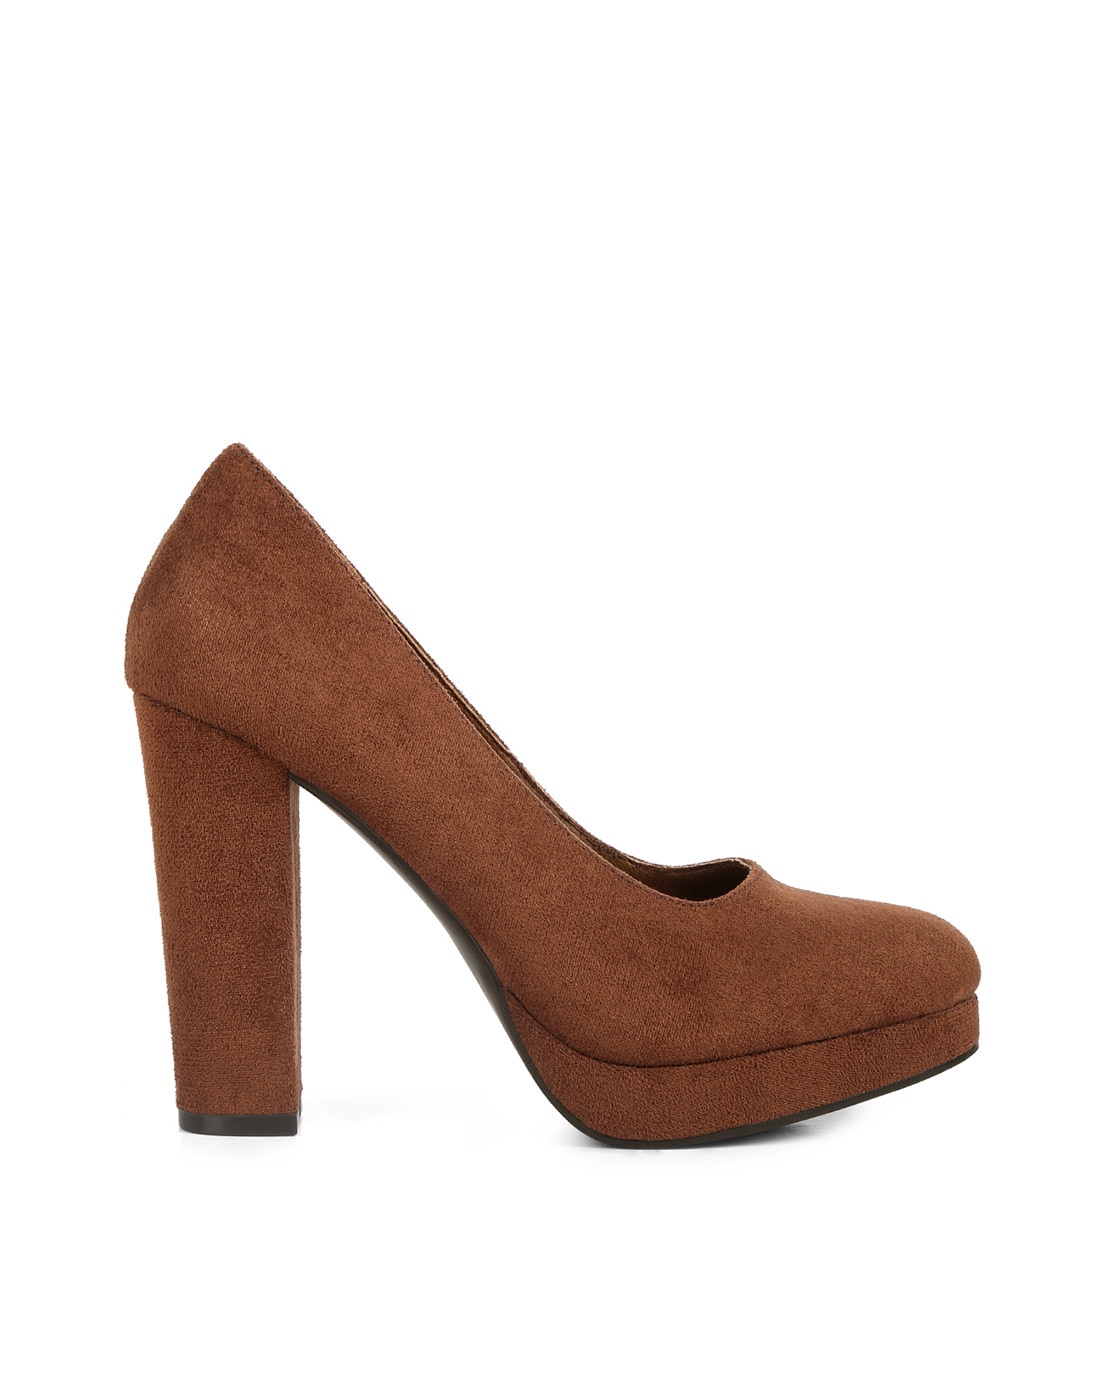 Buy Beige Heeled Shoes for Women by Flat n Heels Online | Ajio.com